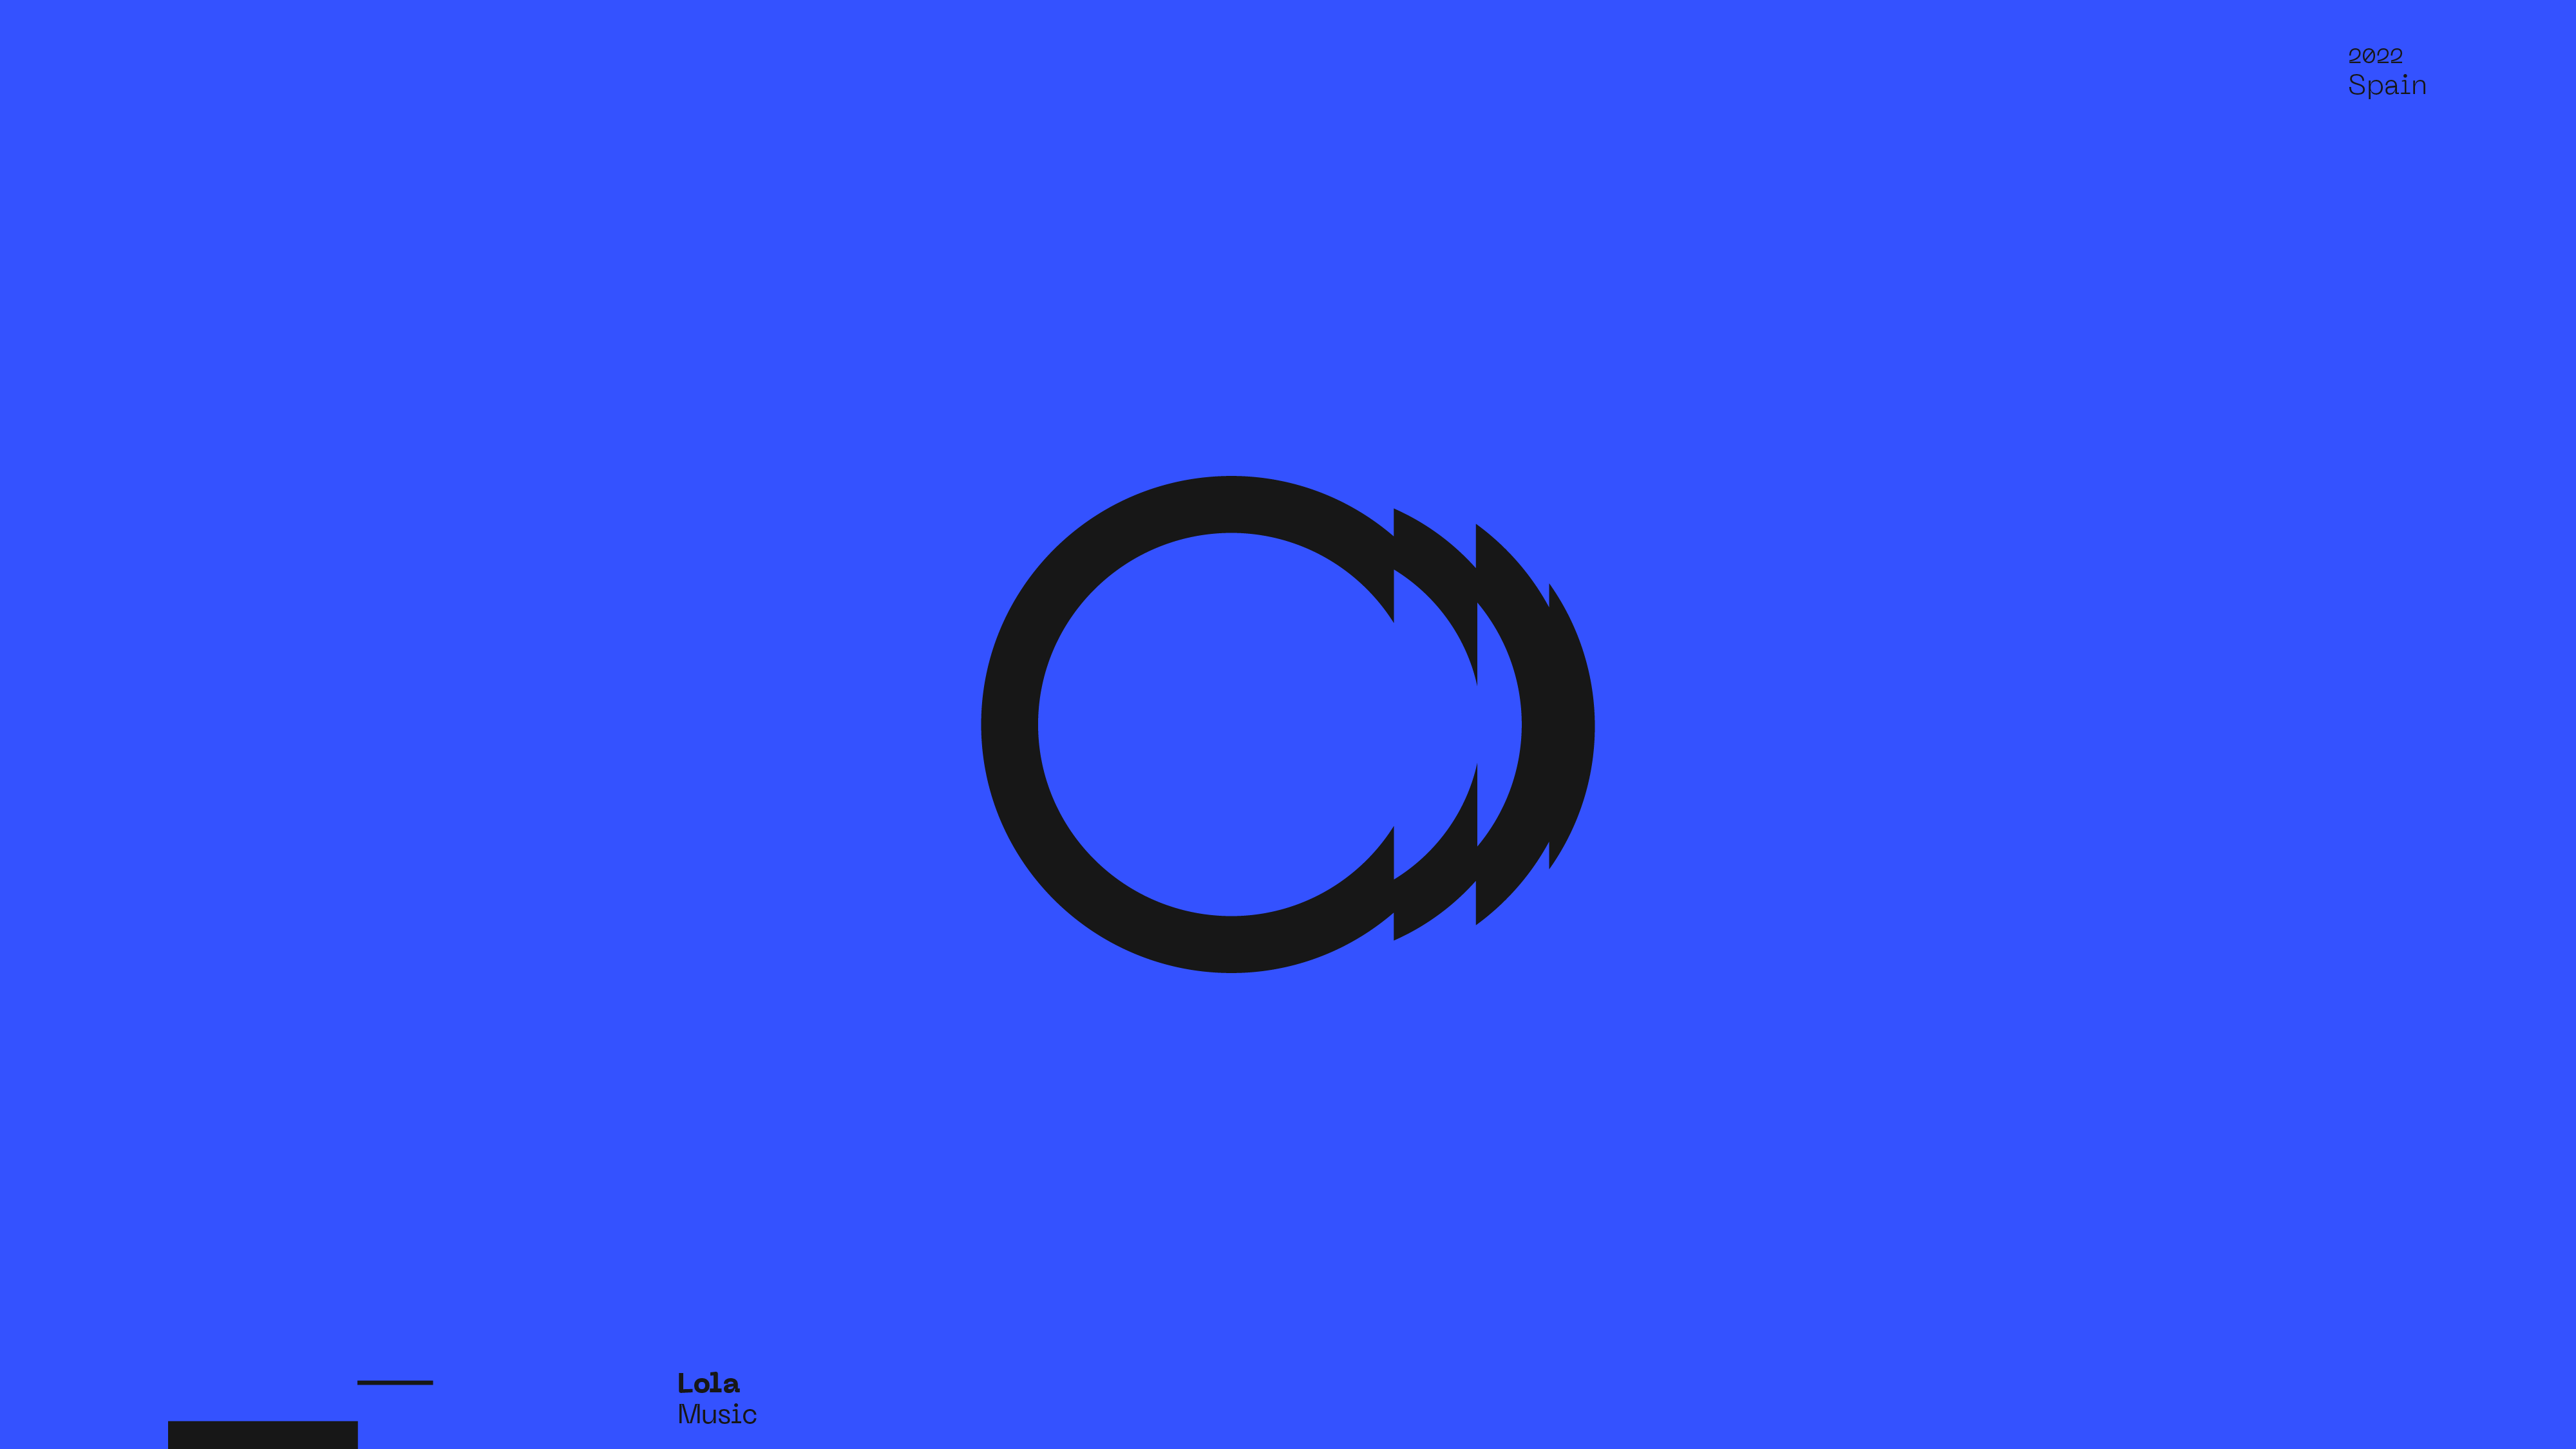 Guapo Design Studio by Esteban Ibarra Logofolio 2022 logo designer — Lola Music